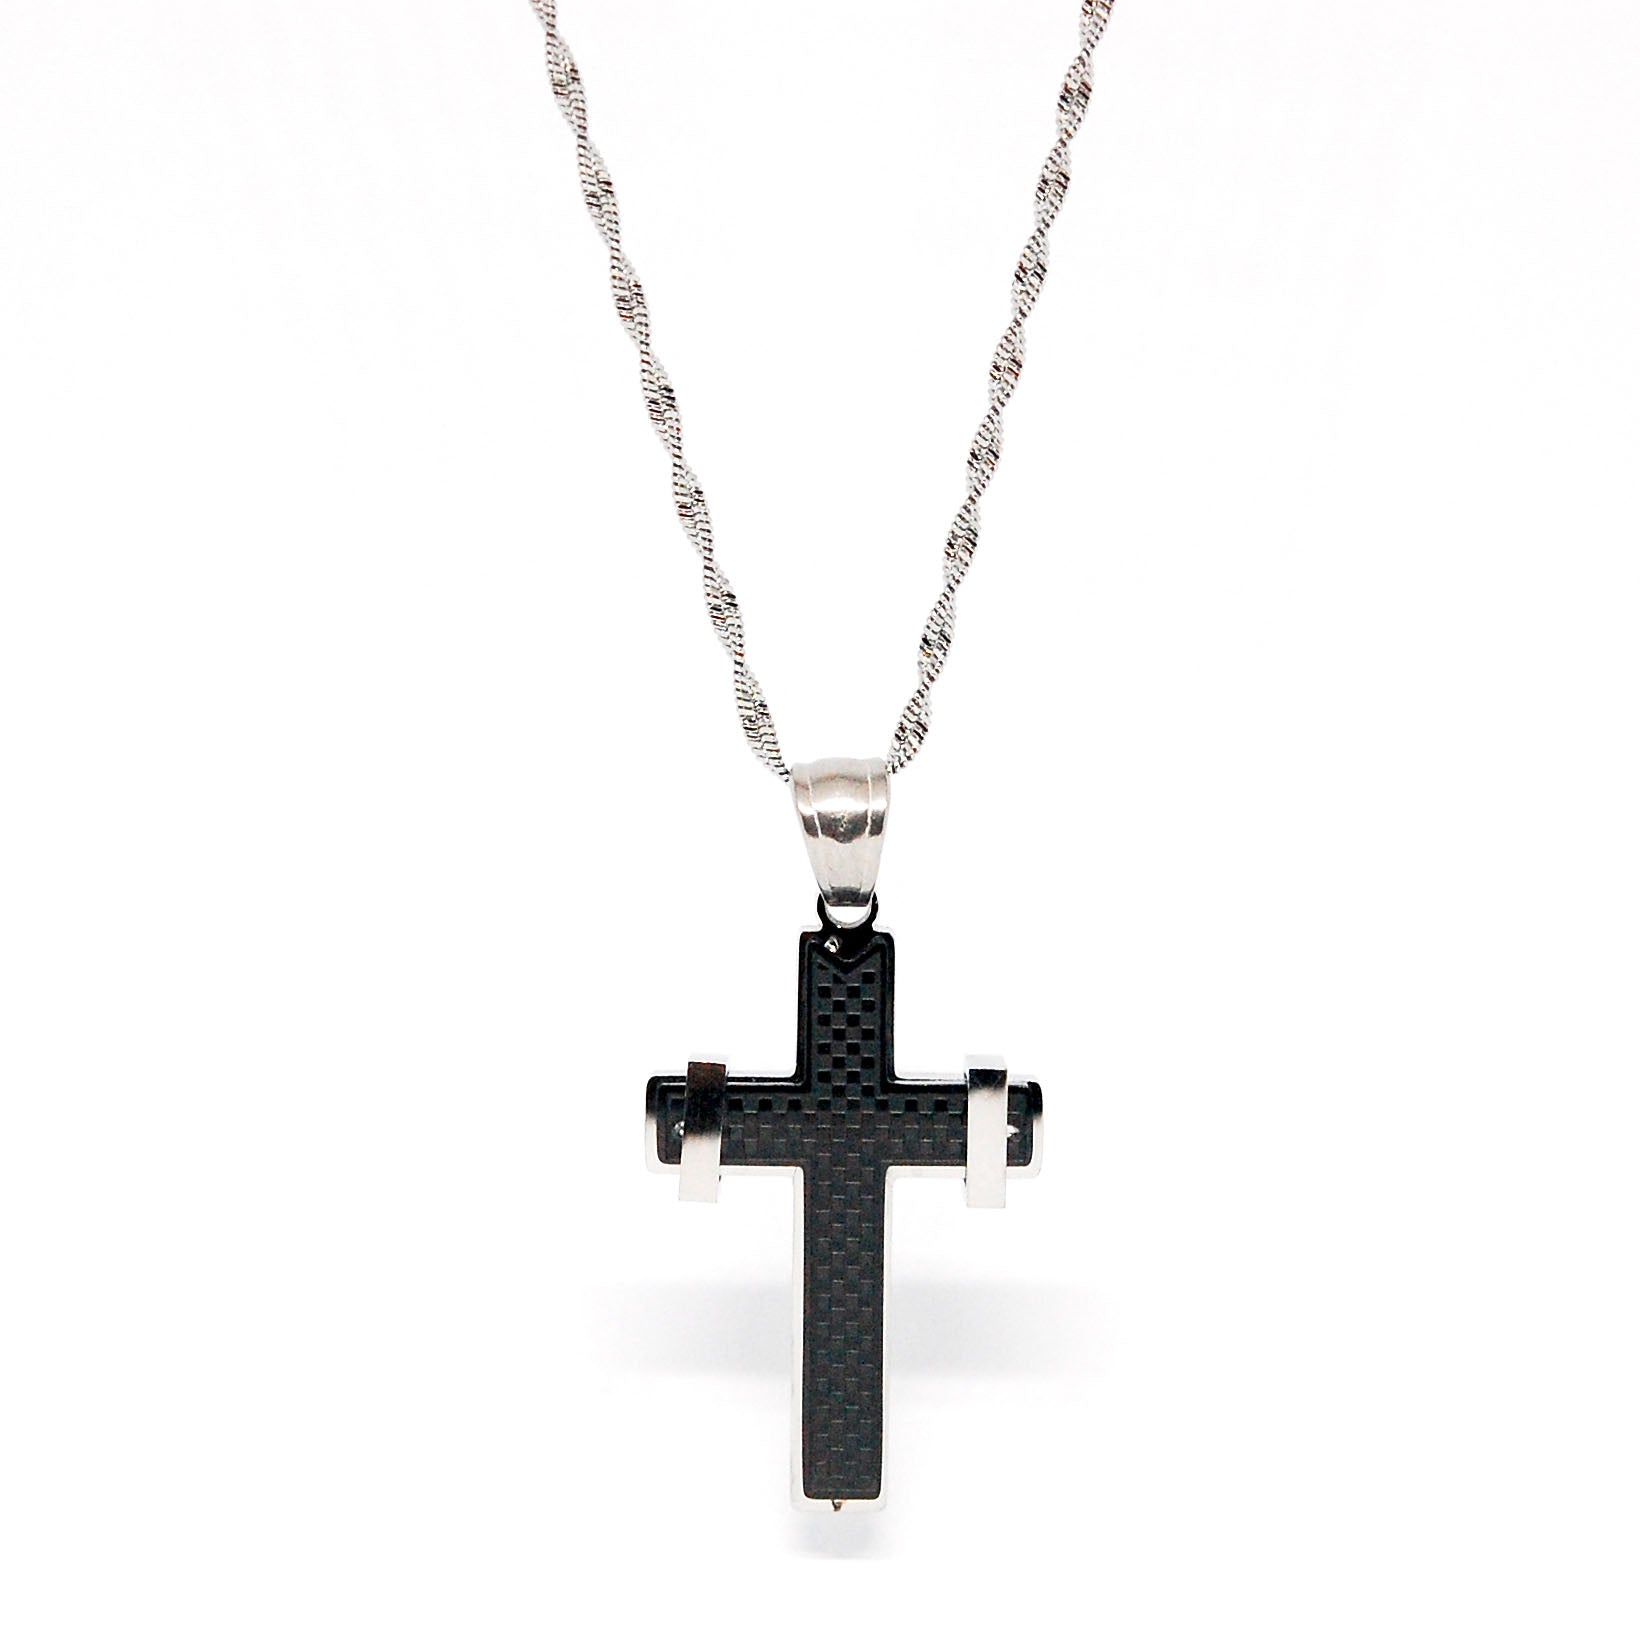 ESN 7315: Black Pixeled Cross Necklace w/ 19.5" Wavy Chain